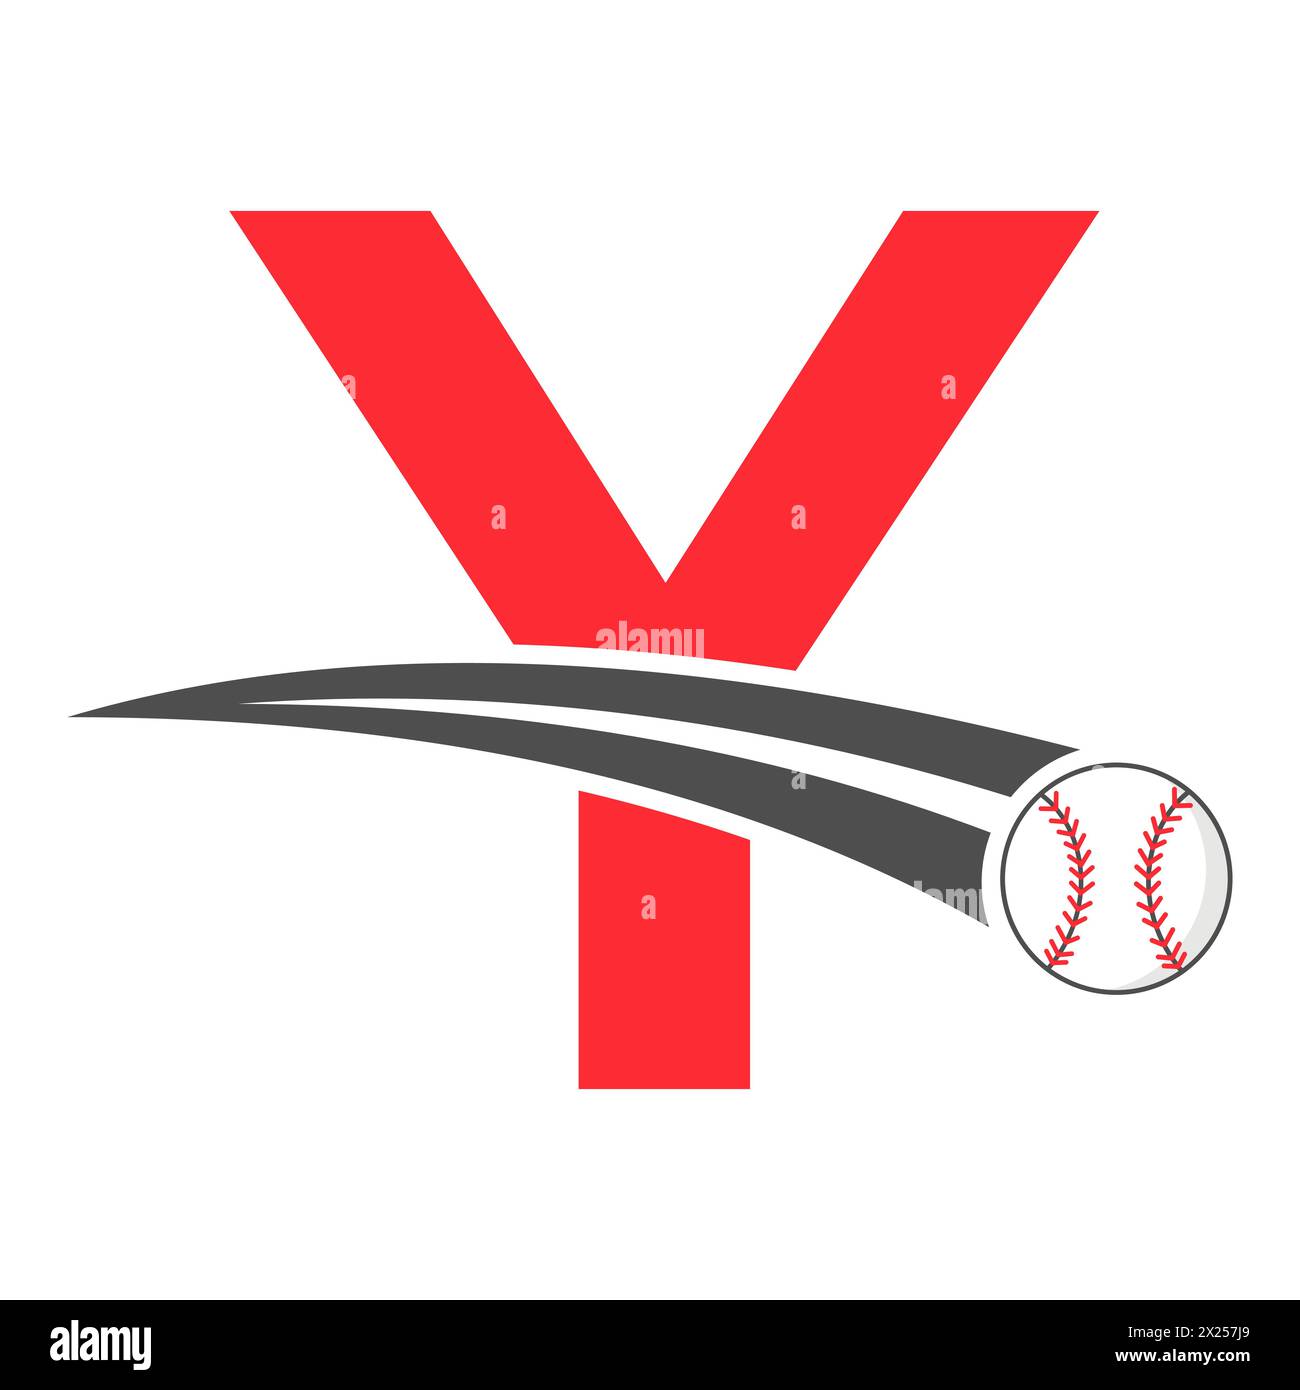 Baseball Logo On Letter Y Concept With Moving Baseball Symbol. Baseball Sign Stock Vector